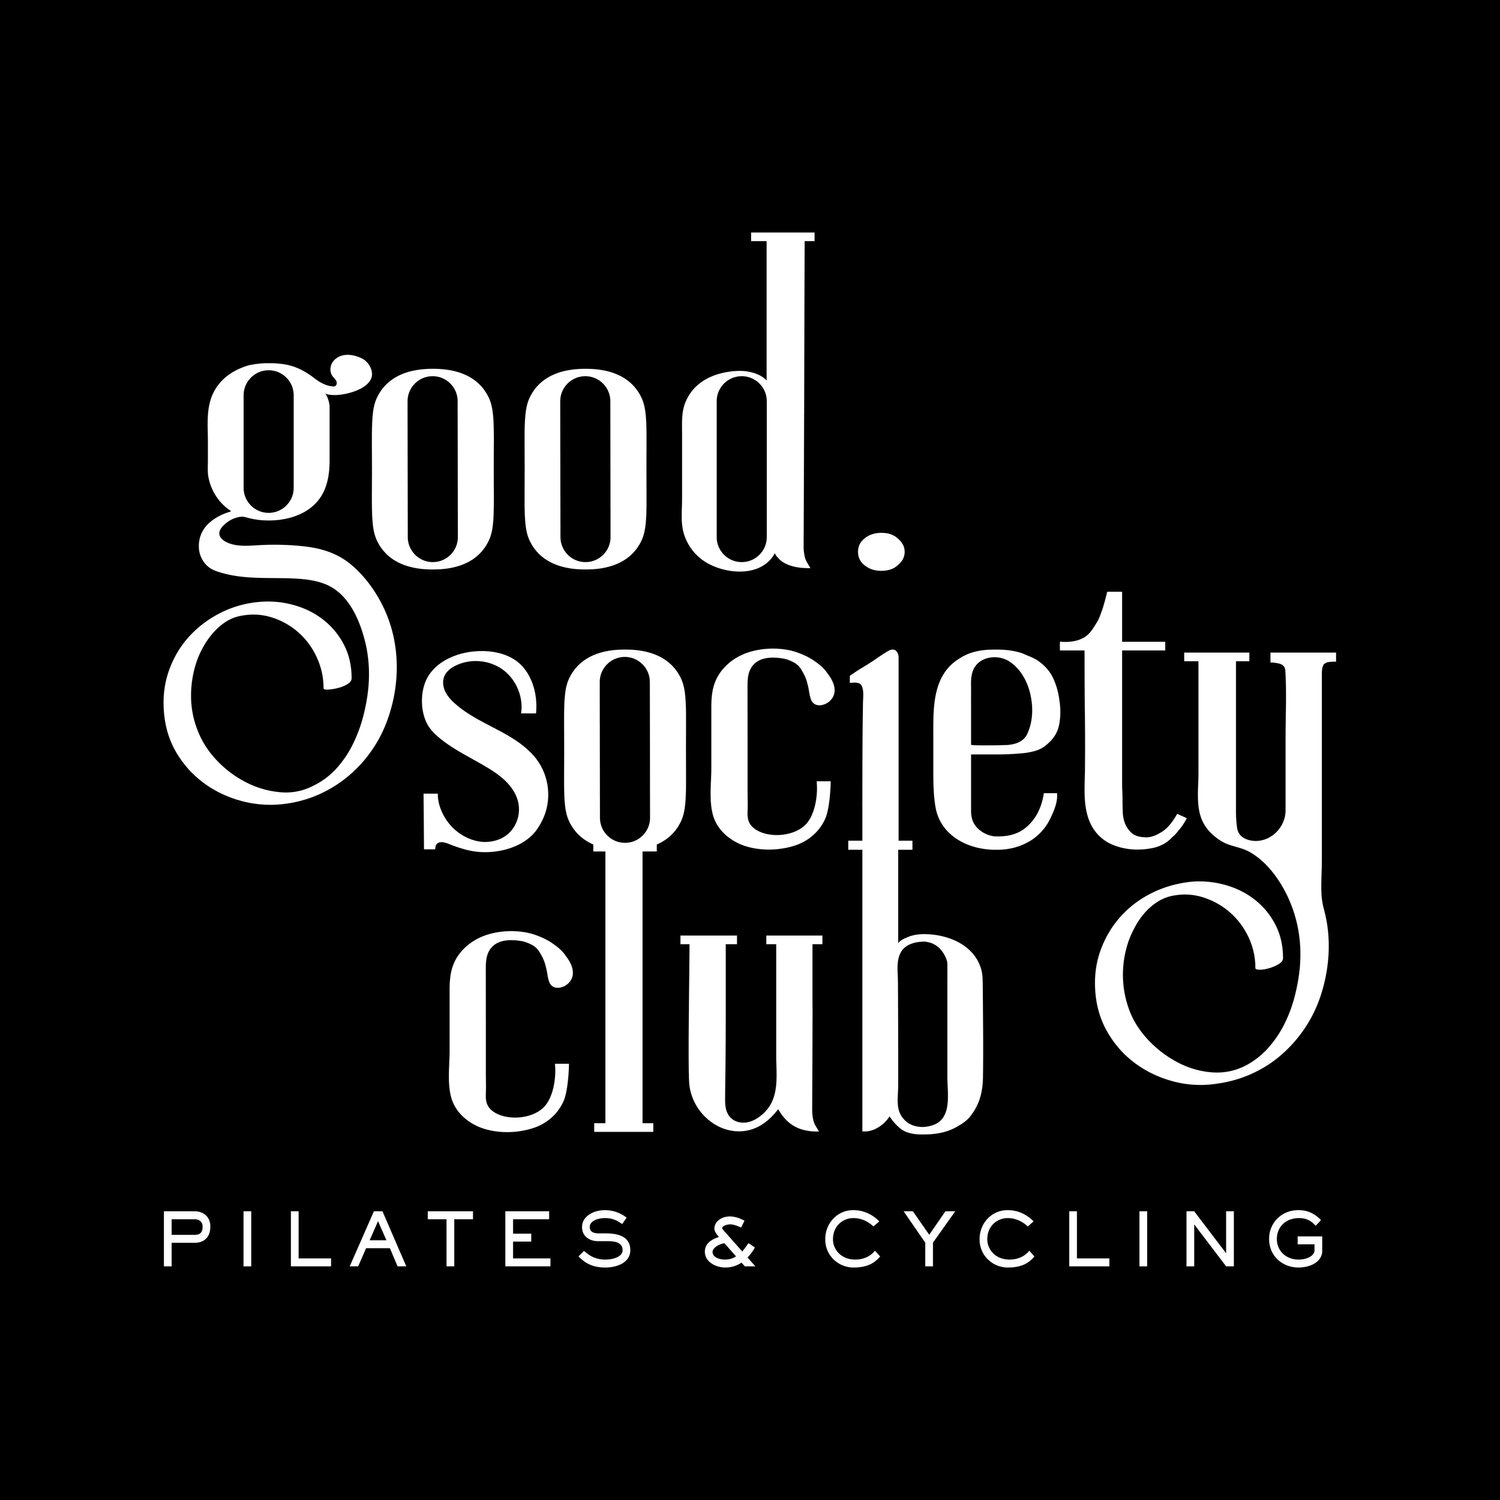 GOOD SOCIETY CLUB PILATES & CYCLING